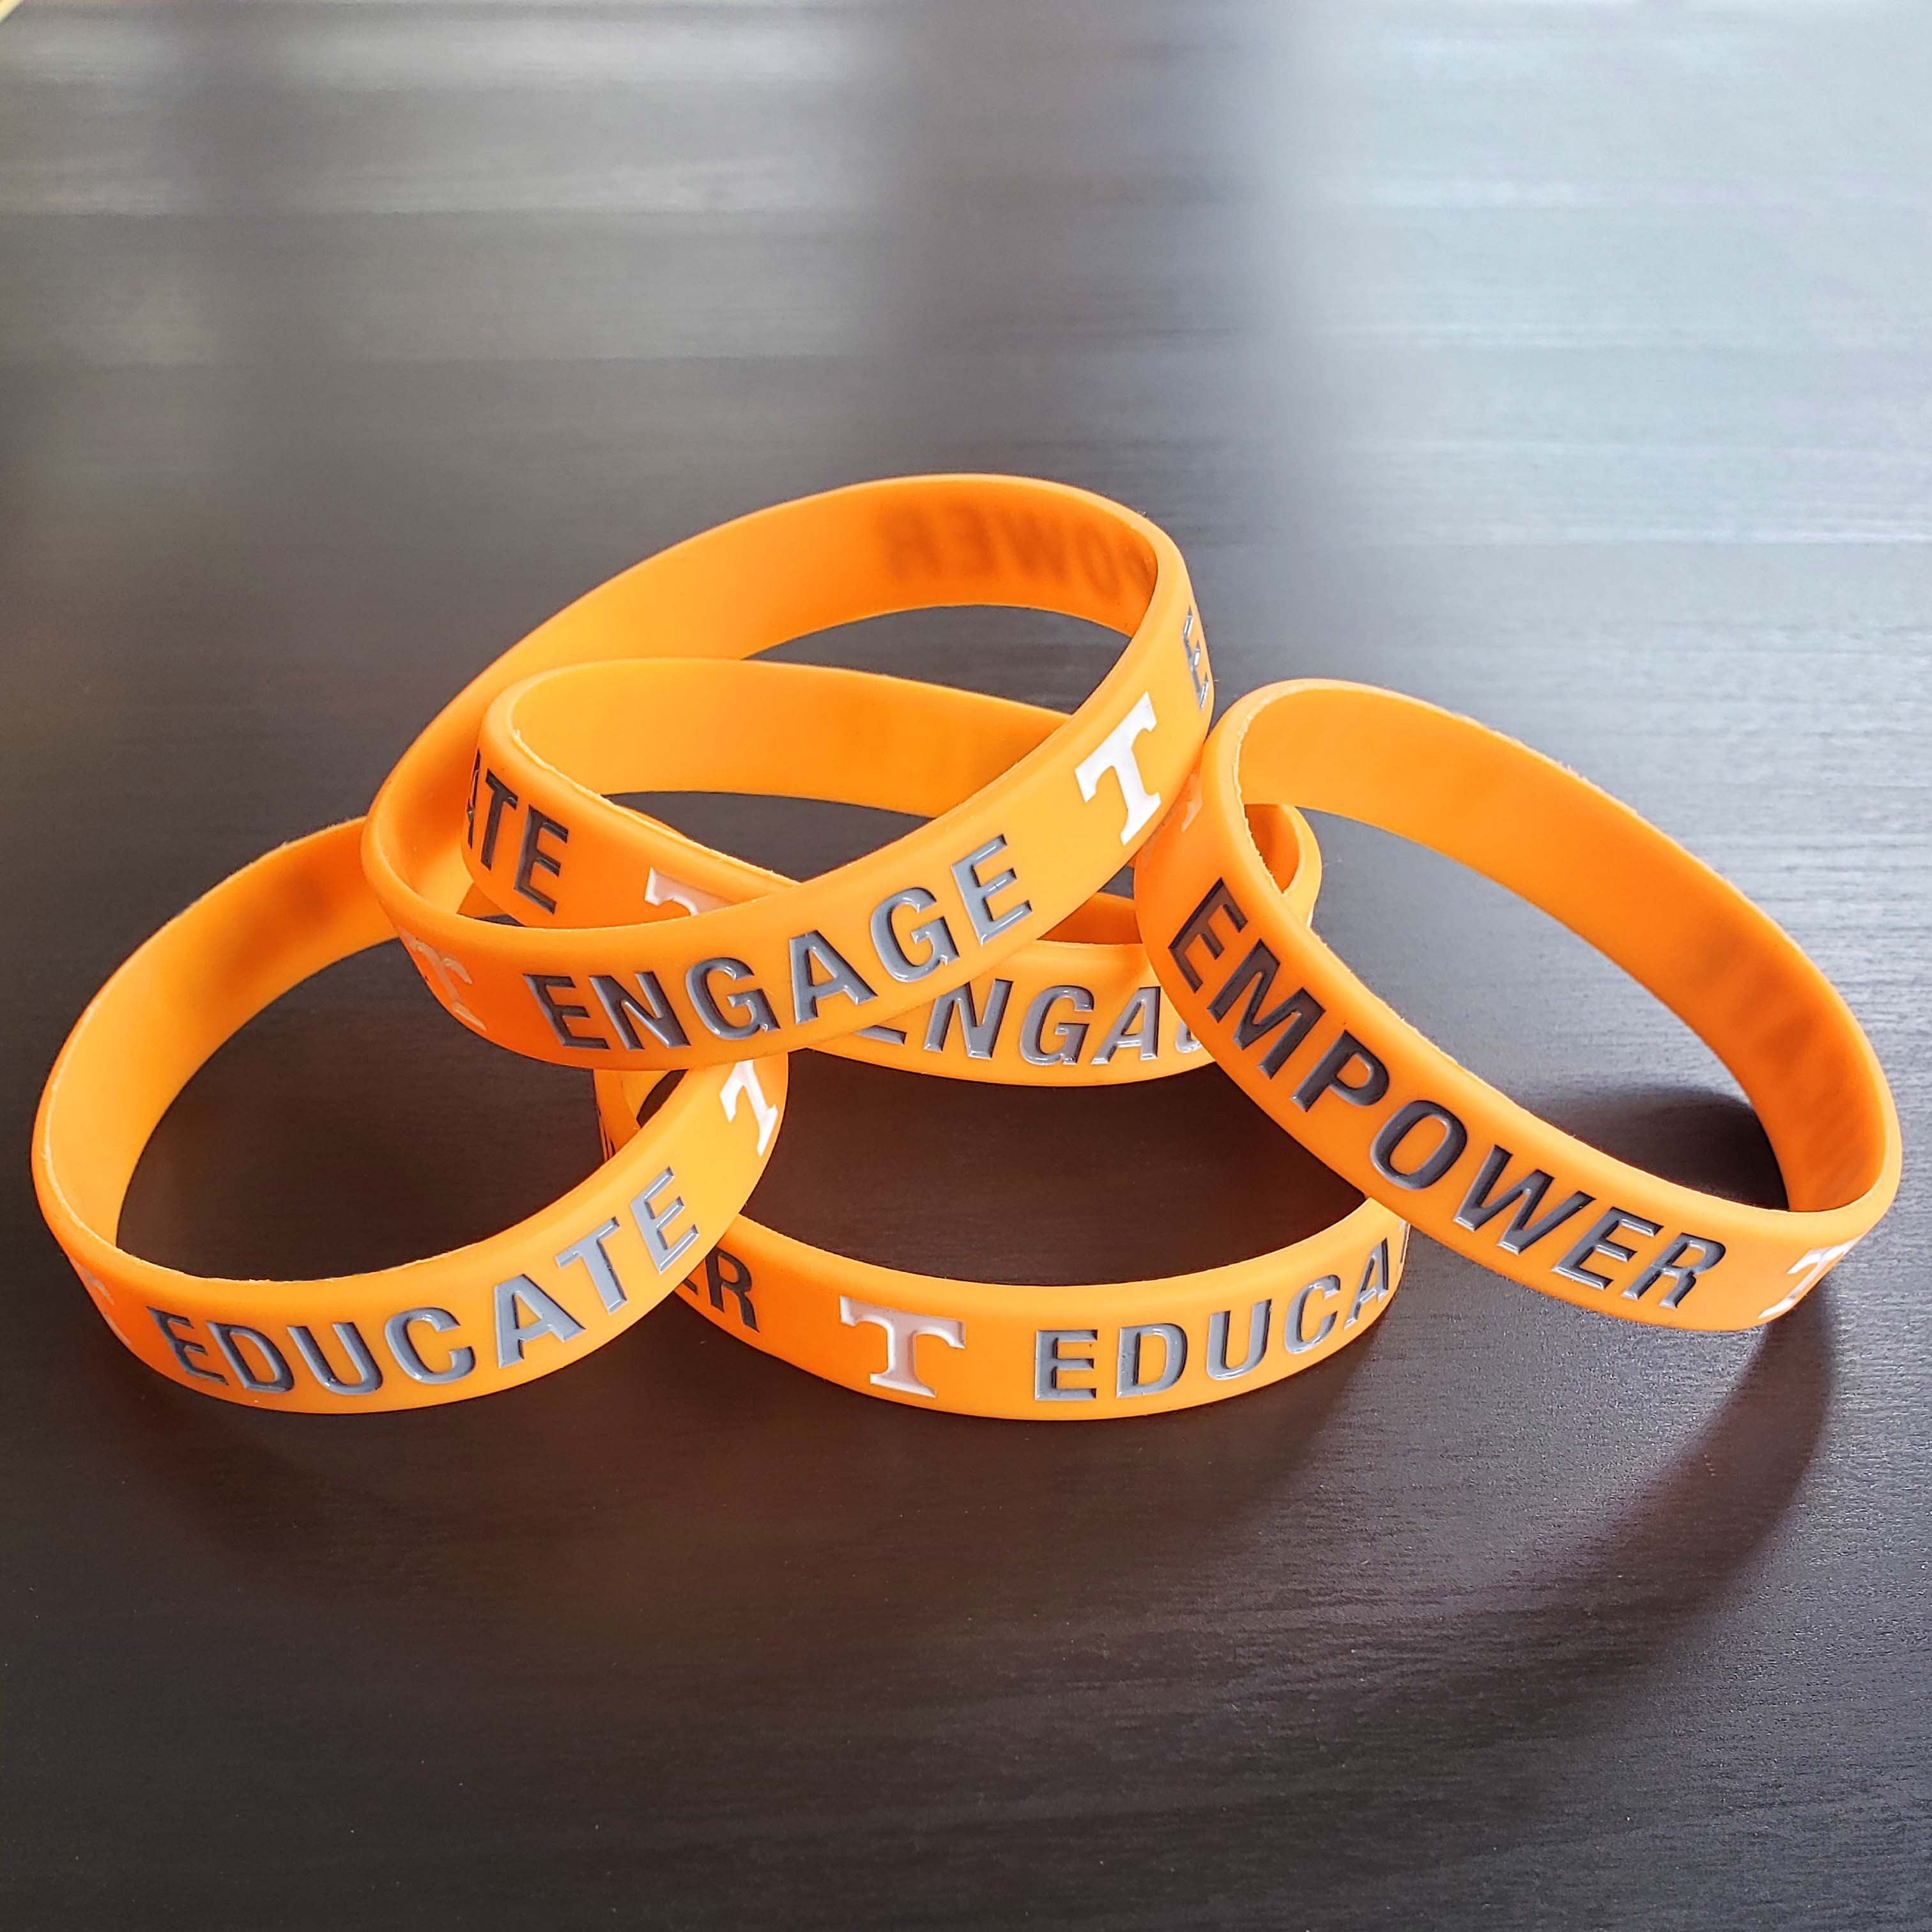 University of Tennessee orange bracelets.